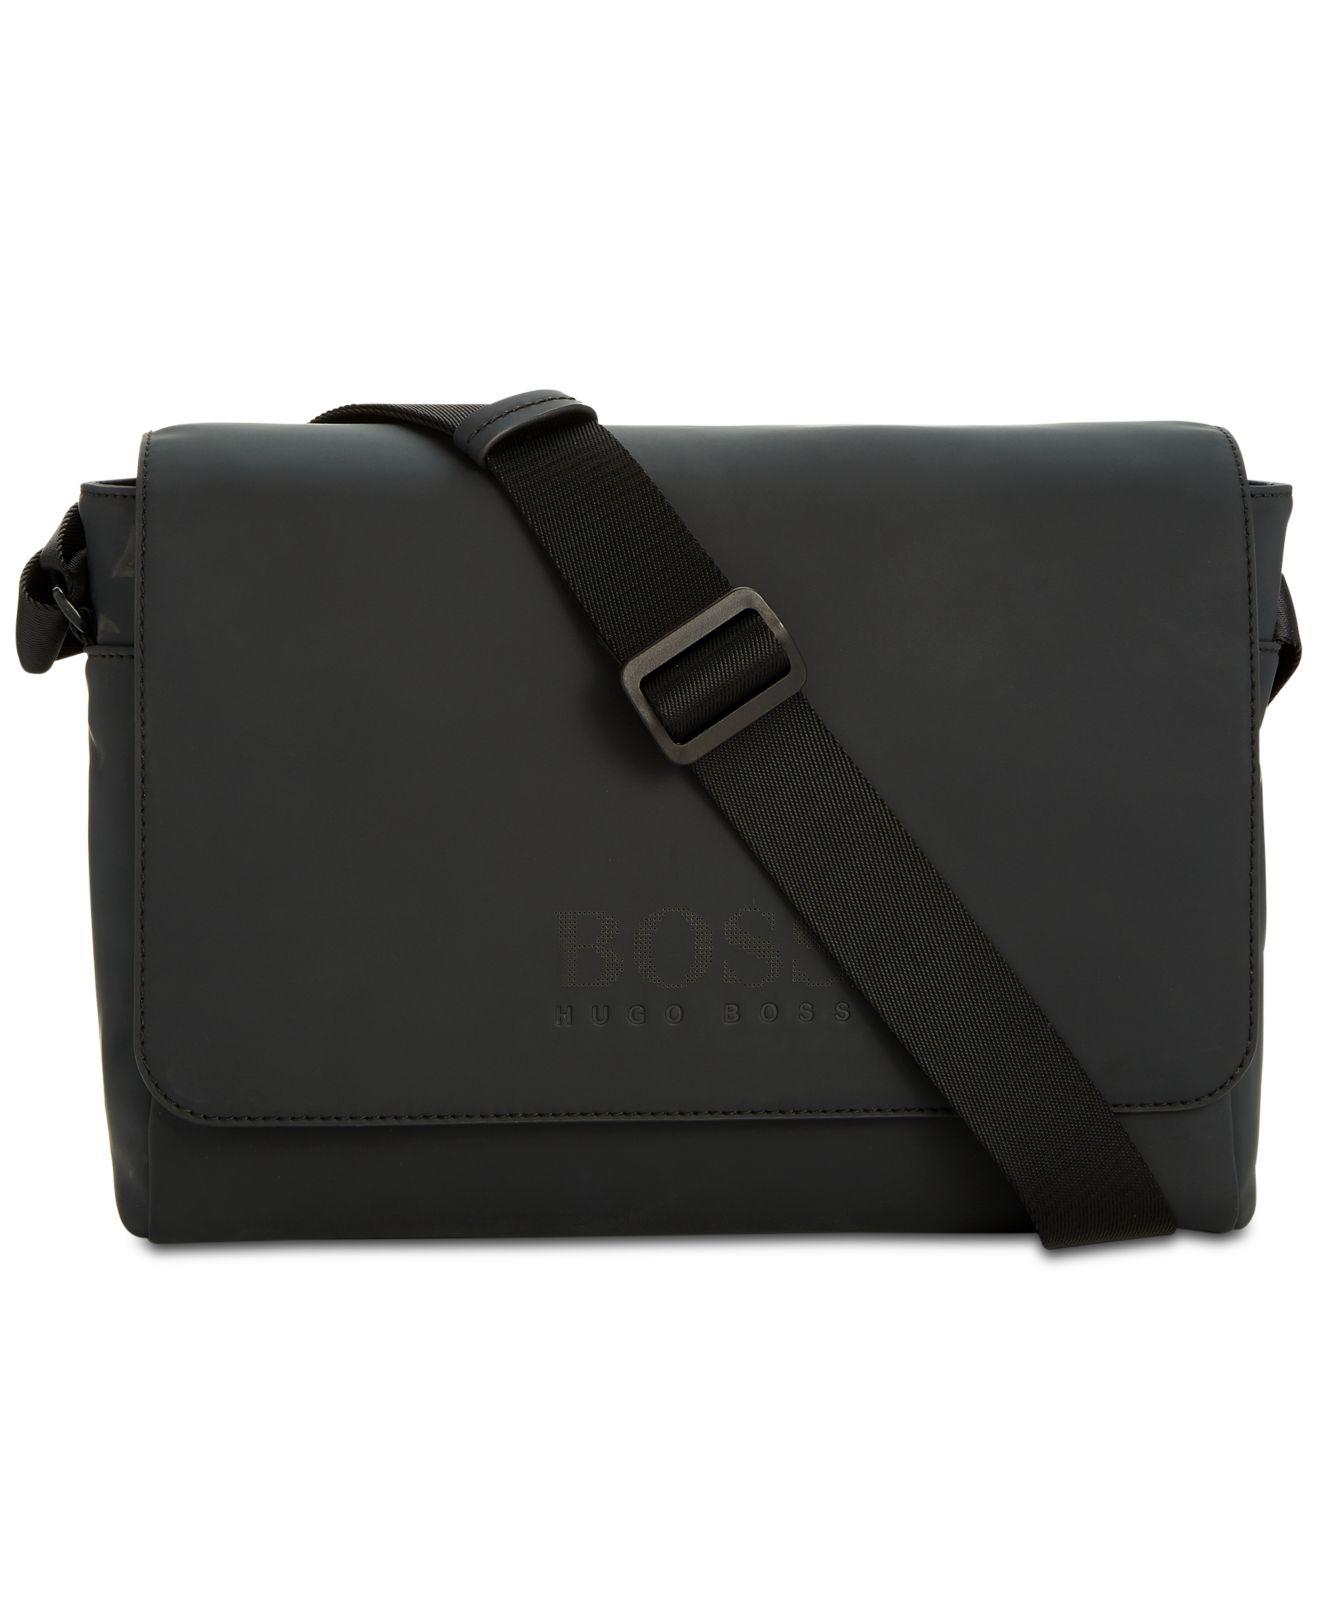 Hugo Boss Shoulder Bag Mens Shop Cheapest, Save 57% | jlcatj.gob.mx